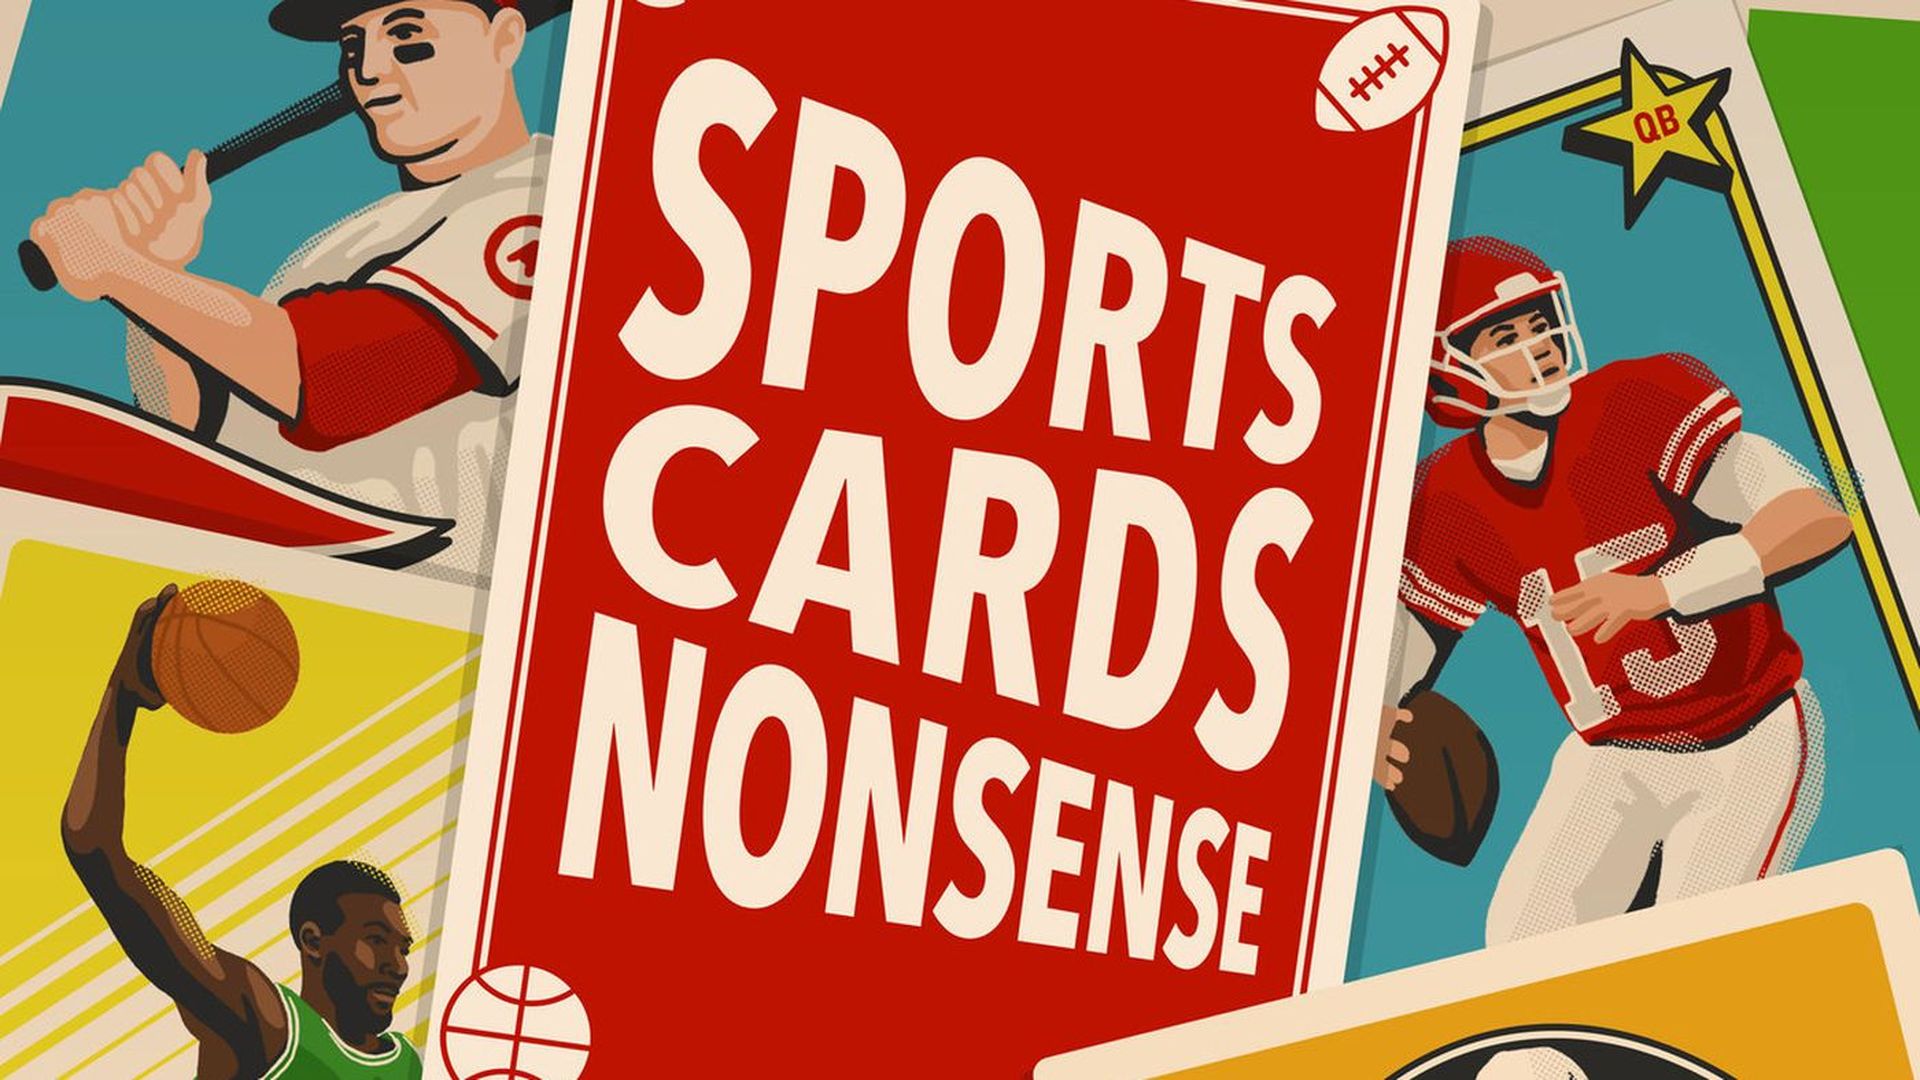 Sports Card Nonsense cover